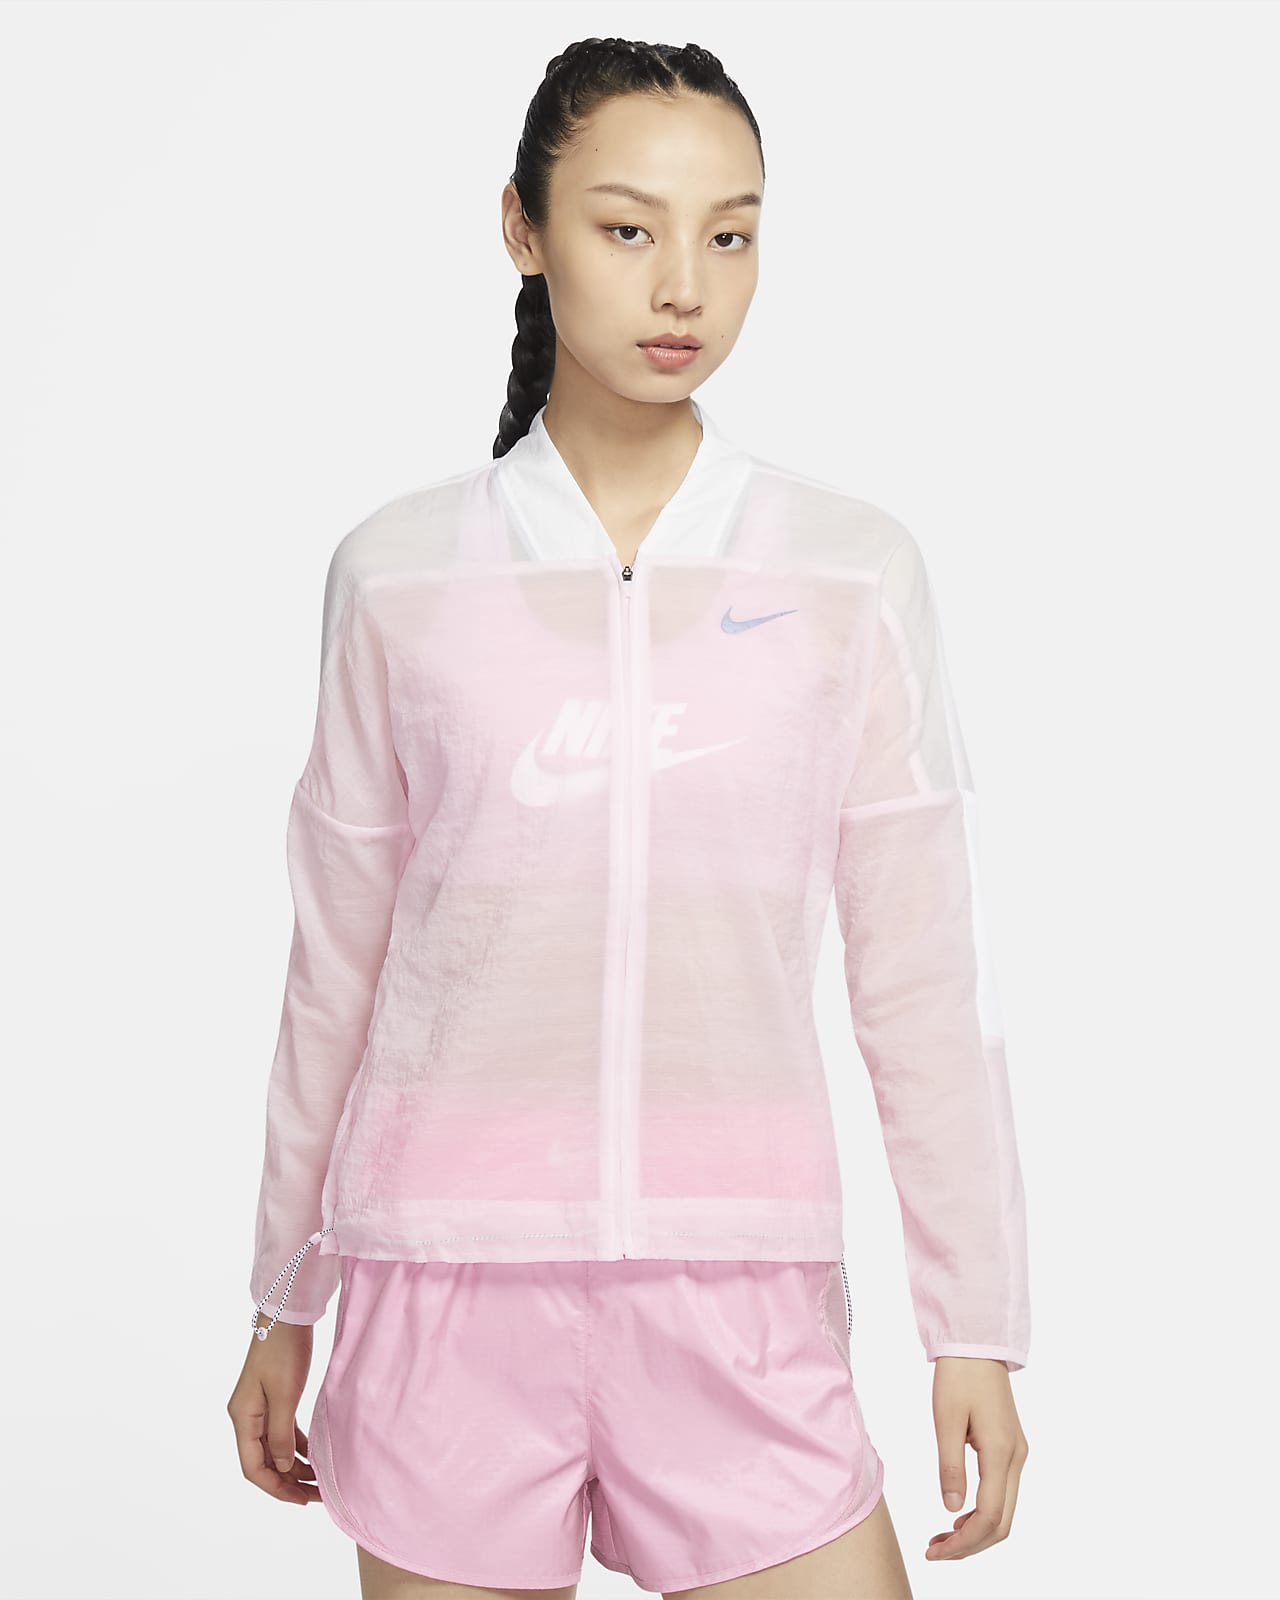 Nike Icon Clash Women's Running Jacket 